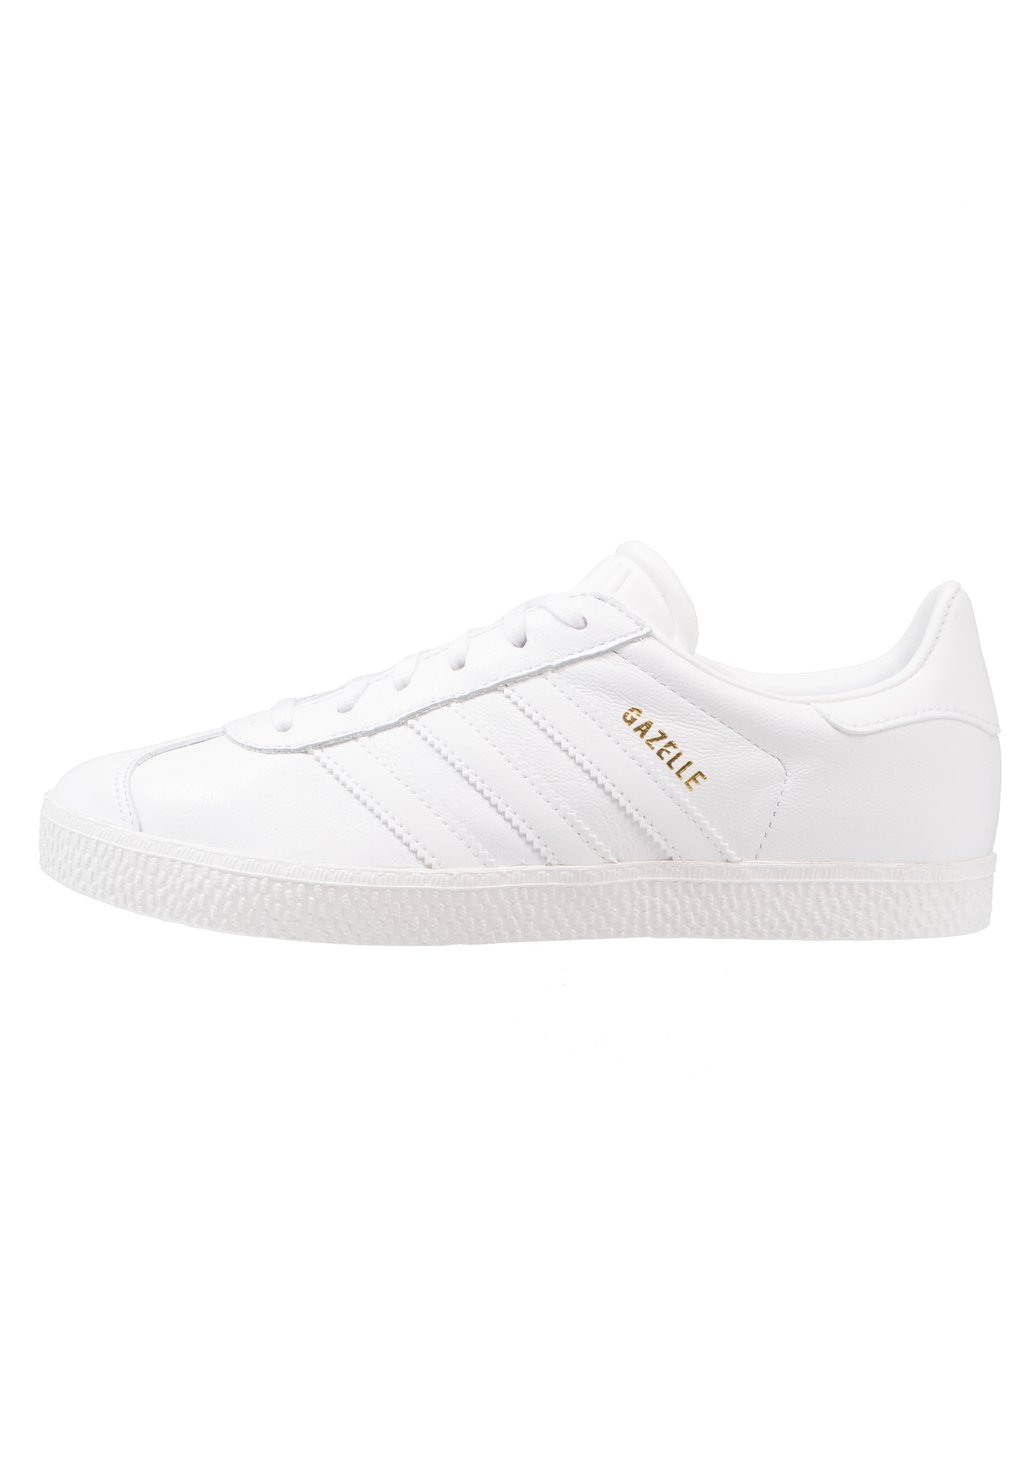 Полукеды Gazelle Unisex adidas Originals, цвет footwear white